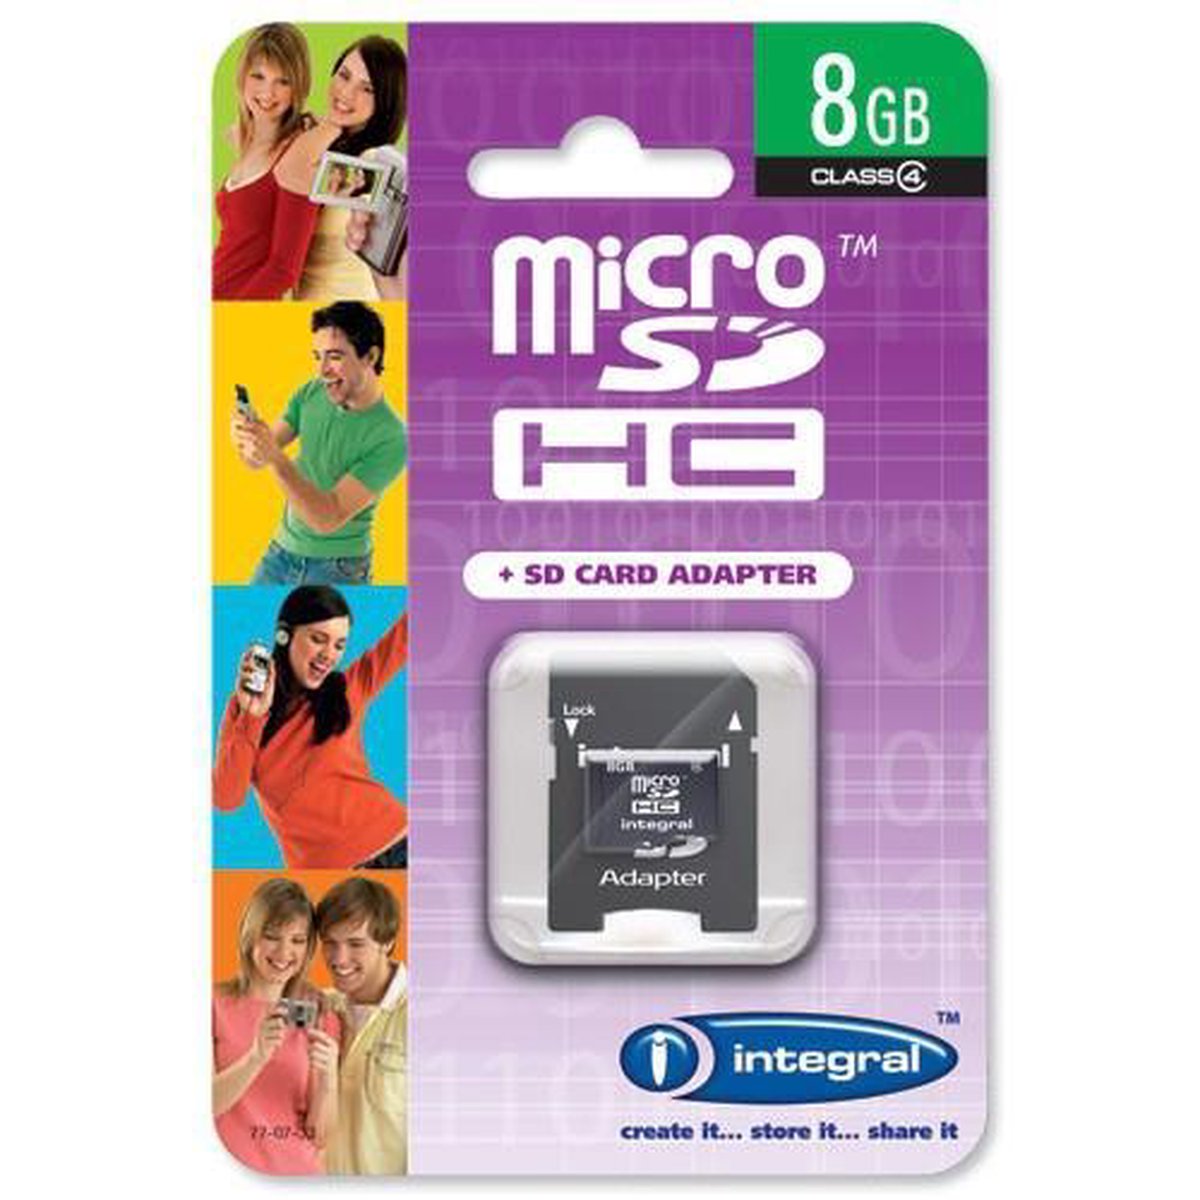 Integral INMSDX256G10-SEC - Carte Micro SD - 256 Go